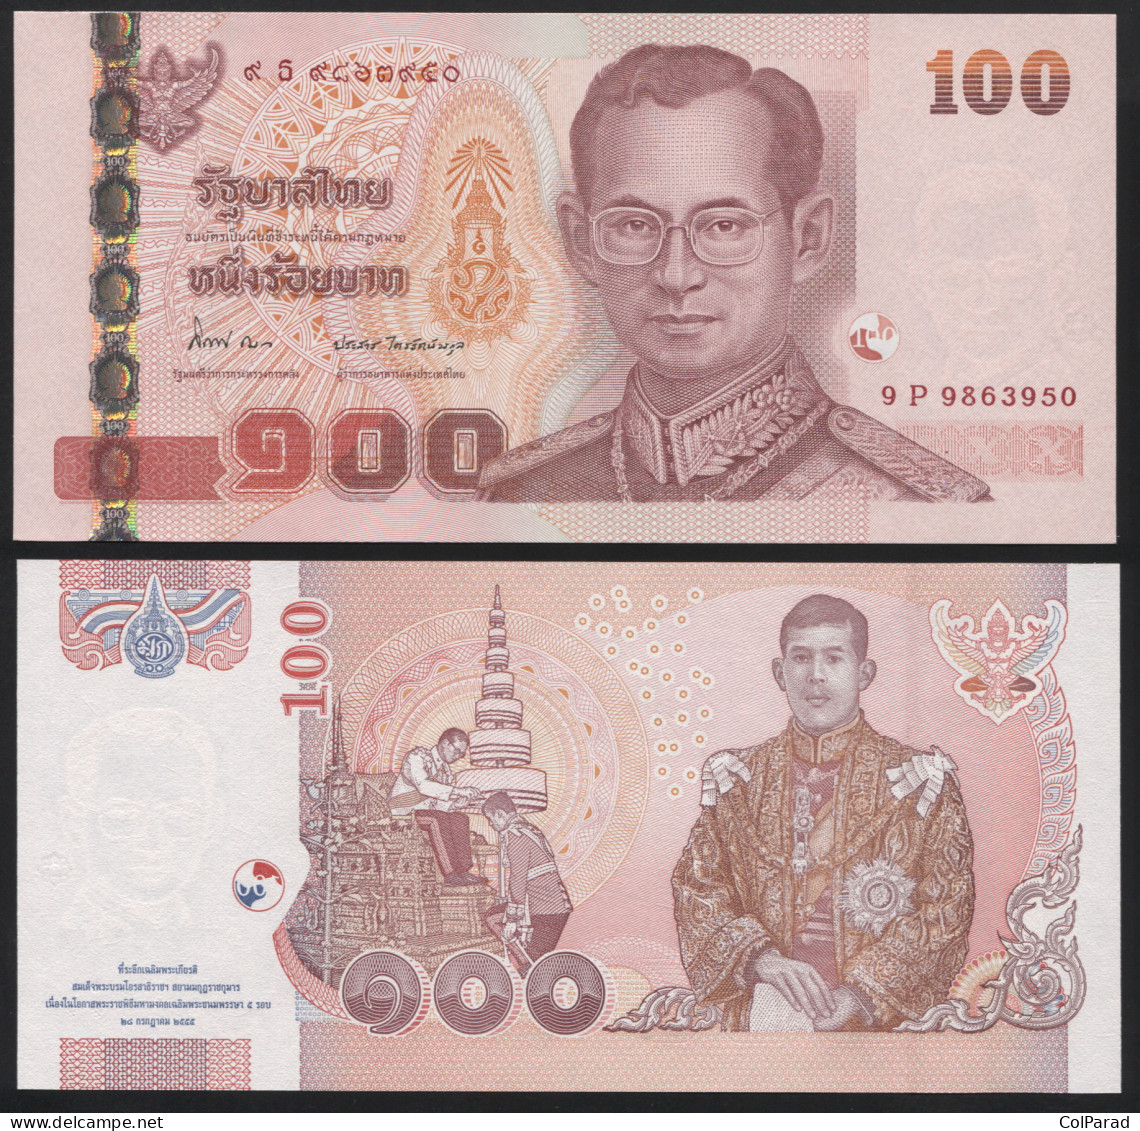 THAILAND 100 BAHT - BE2555 (2012) - Unc - P.126a Paper Banknote - Thailand